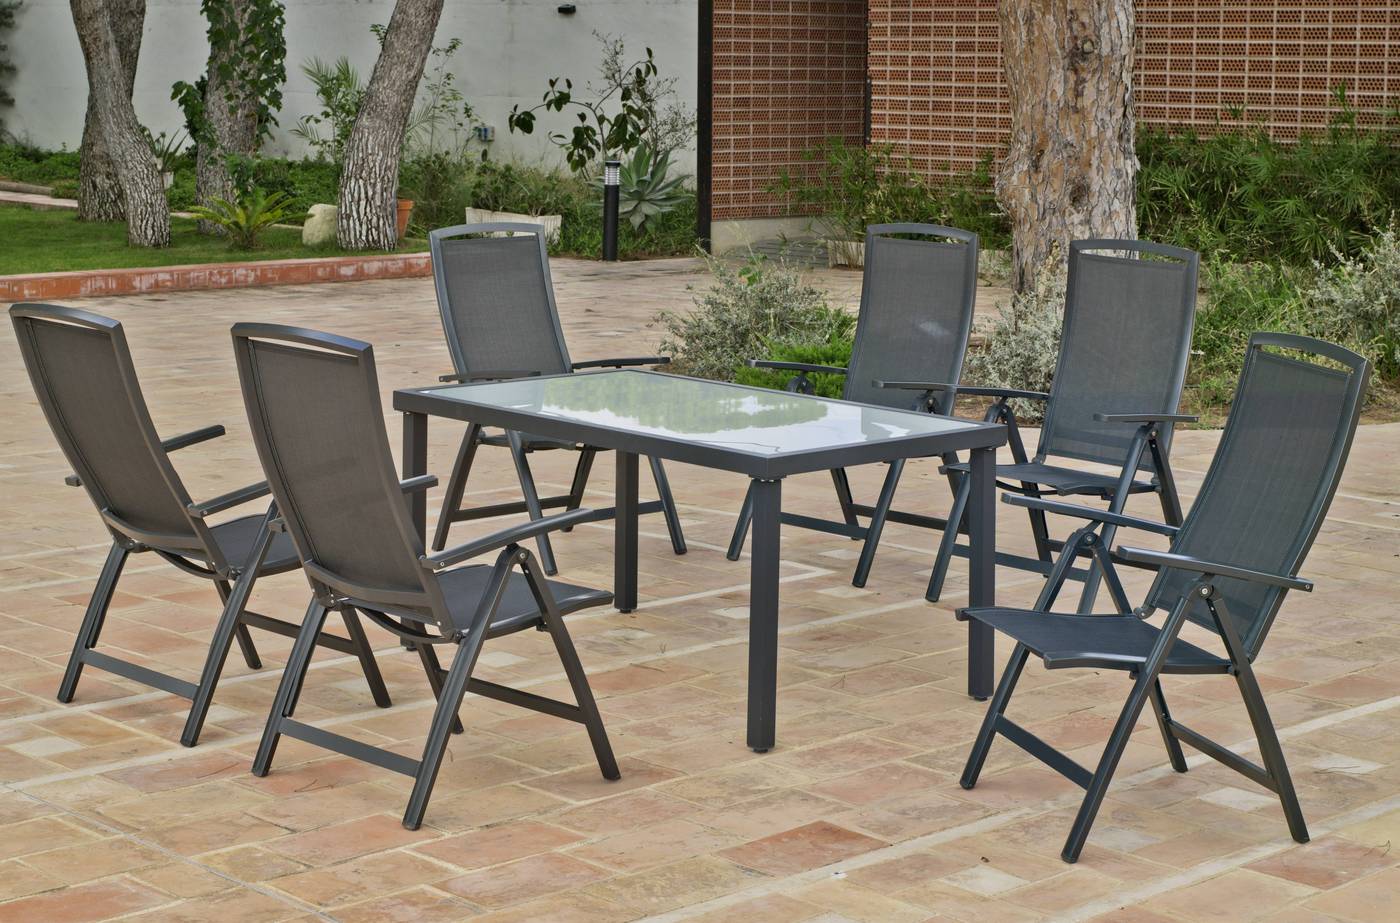 Set Aluminio Horizon-Brescia 150-4 - Conjunto de aluminio color antracita: 1 mesa con tablero de cristal templado de 150 cm. + 4 tumbonas de textilen.